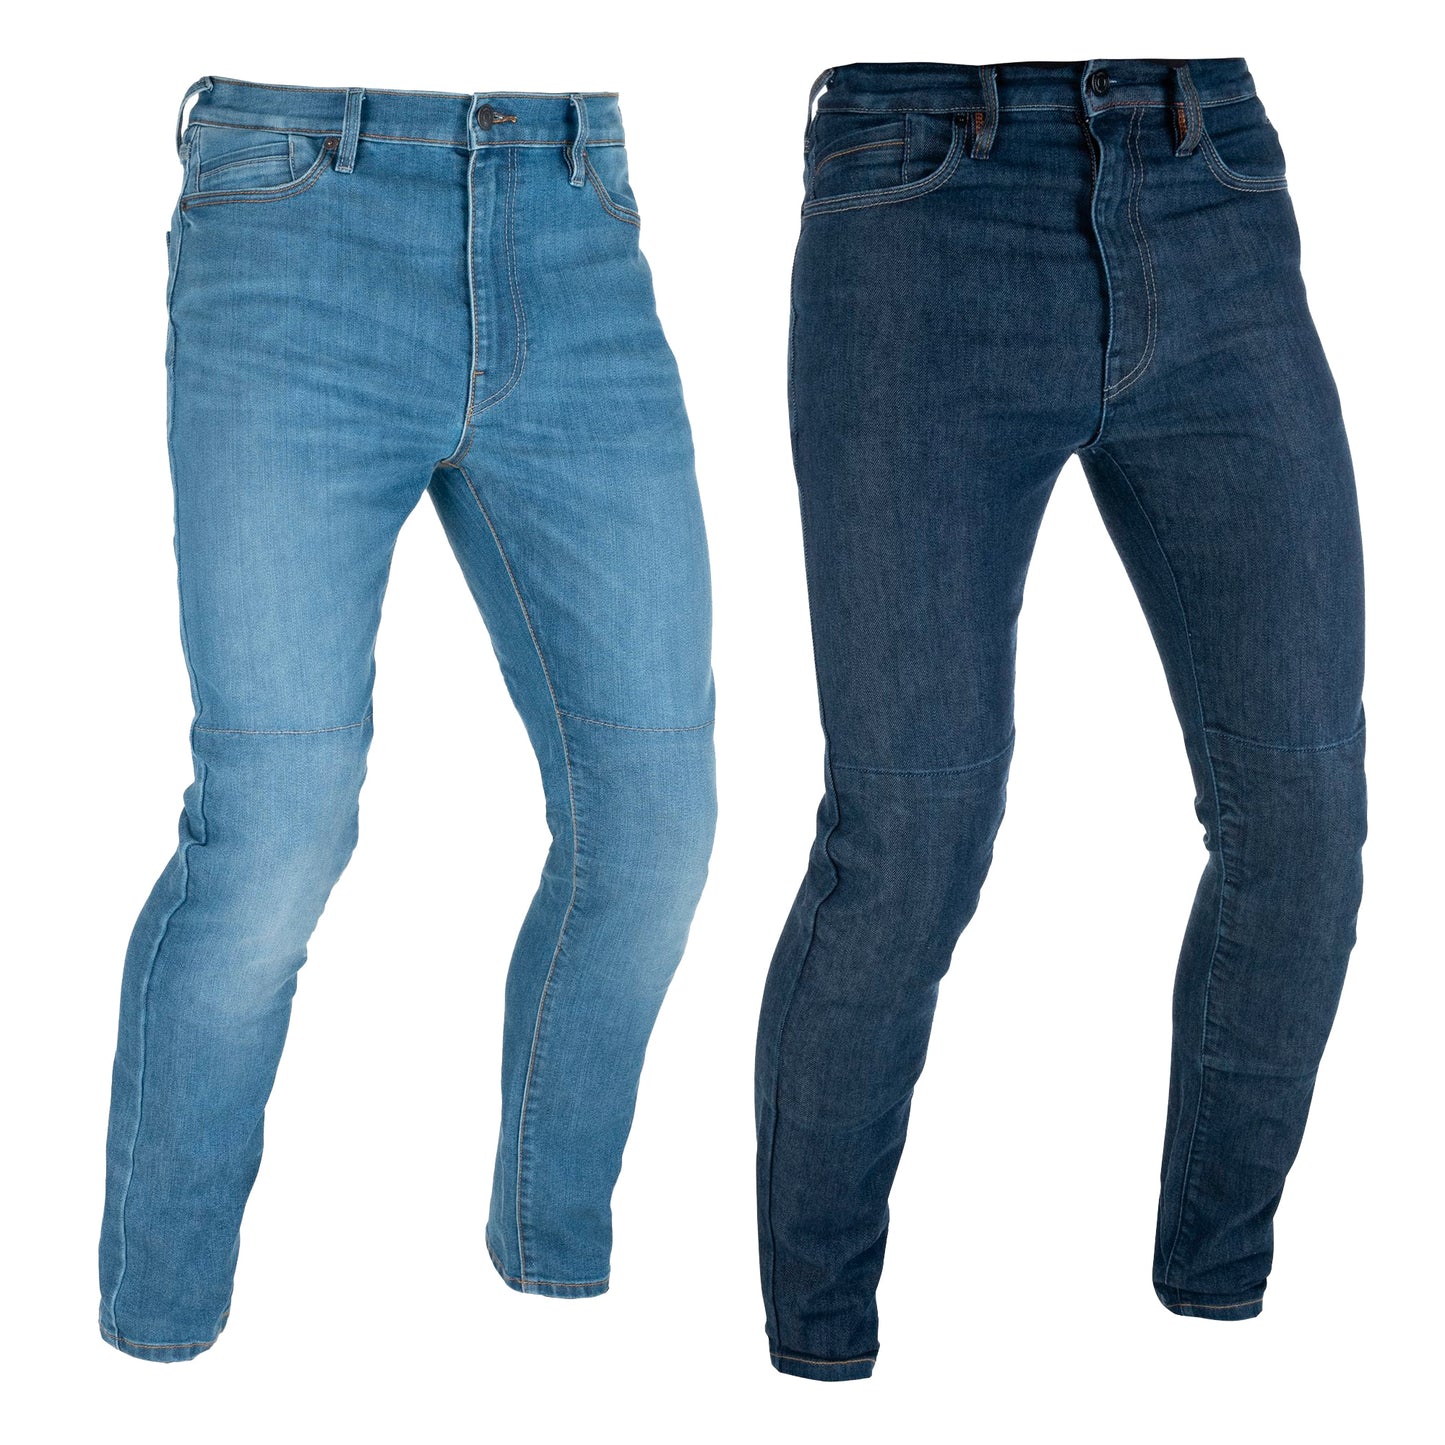 Oxford DM22910-denim jeans biker male/male slim cut indigo blue or worn size 30 to 40 motorcycle (waist measurements)